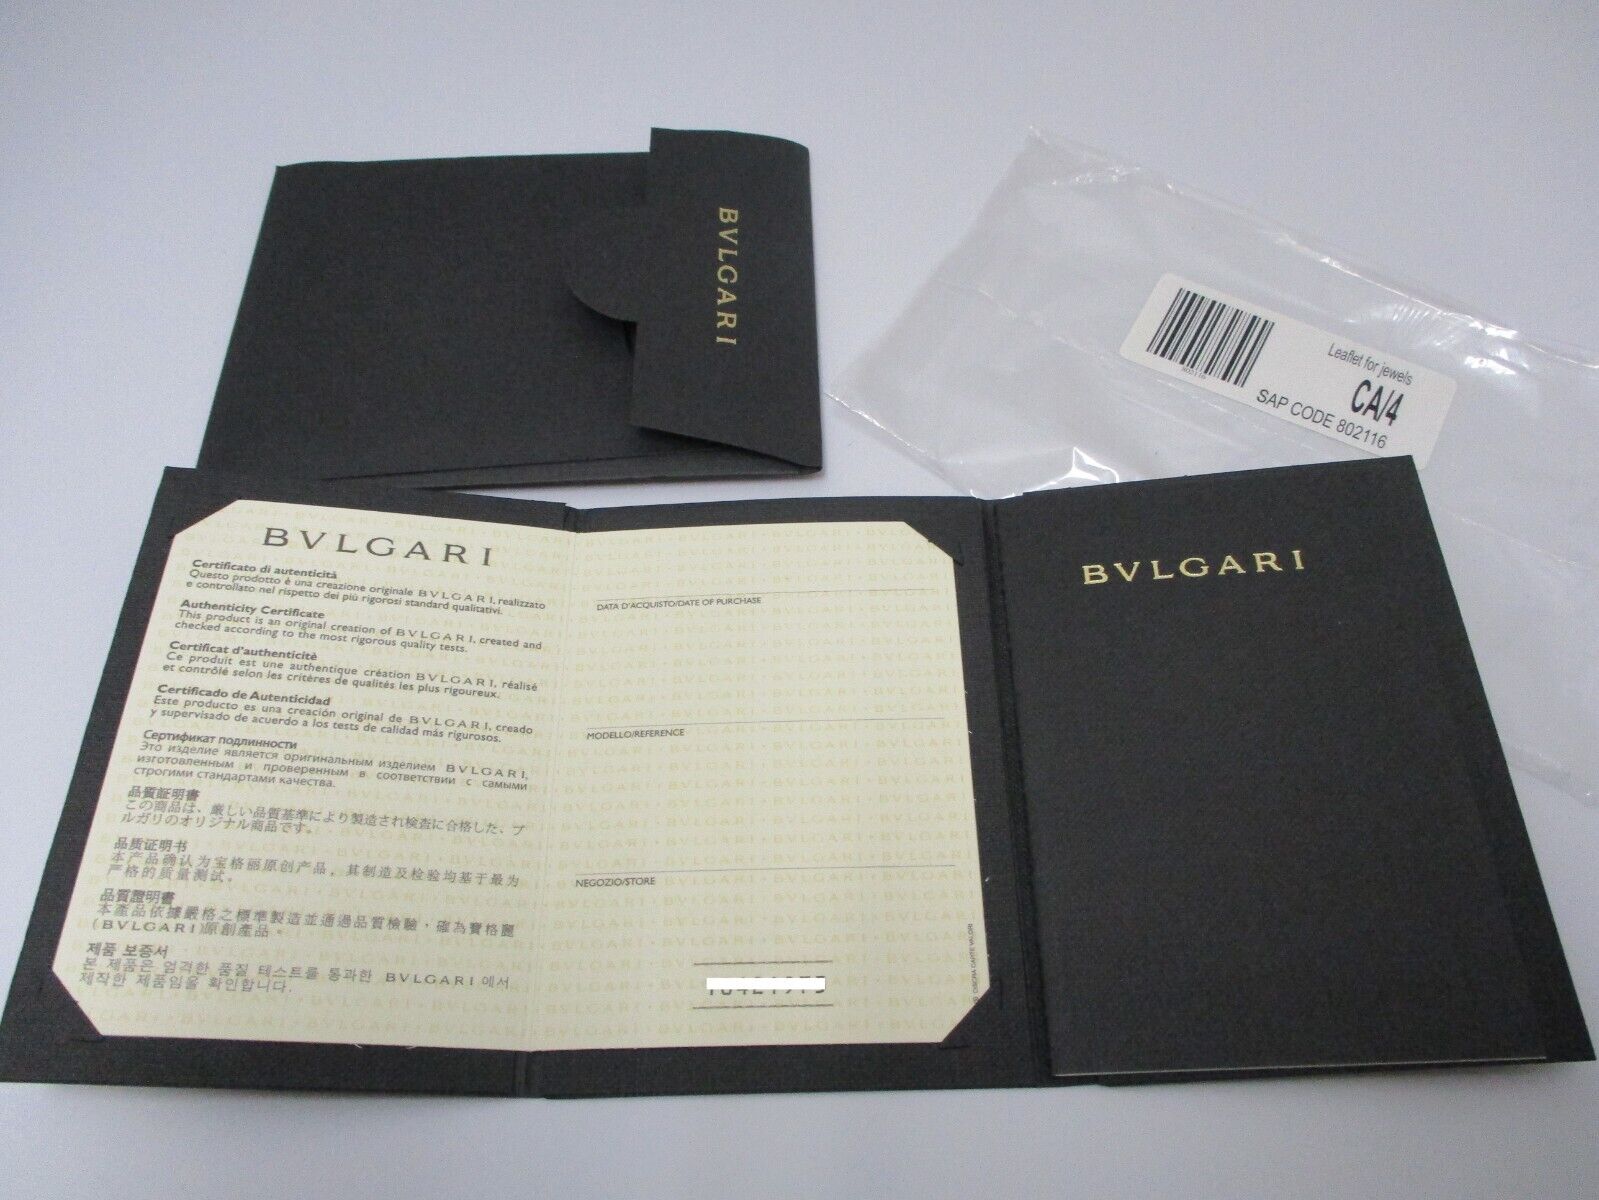 Open Blank Jewelry Certificate Of Authenticity & Care Manual New Bulgari Bvlgari